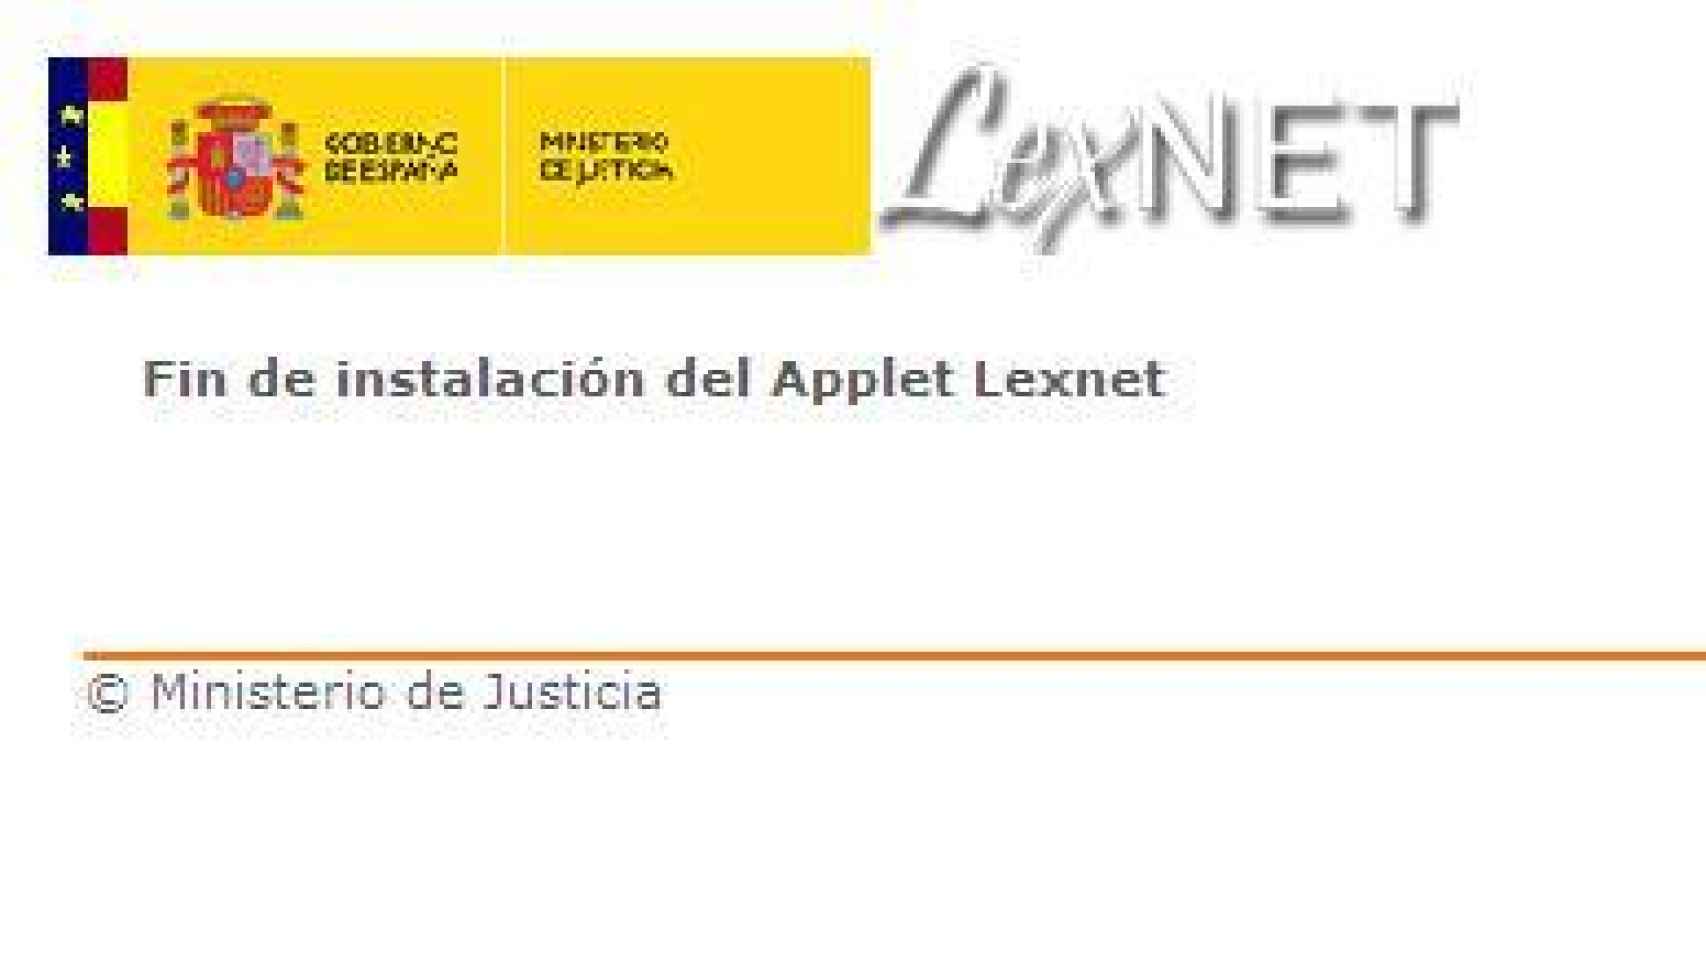 LexNET es un webmail para notificaciones judiciales.